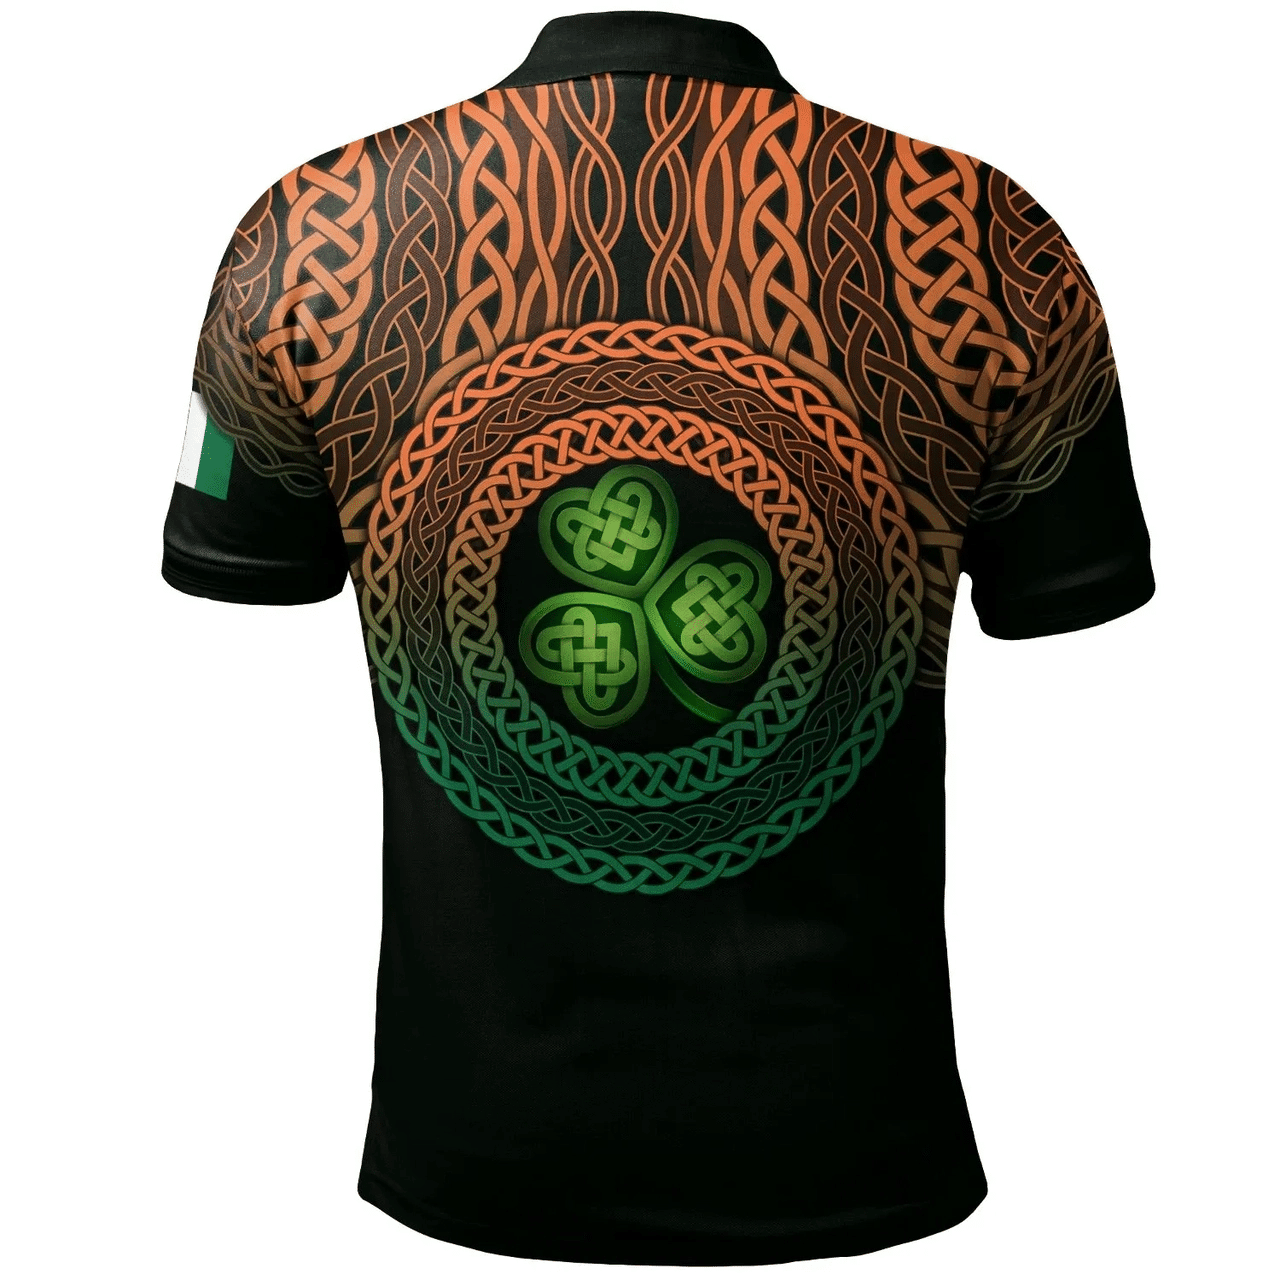 1stIreland Ireland Polo Shirt - Nolan or O'Nowlan Irish Family Crest Polo Shirt - Celtic Pride A7 | 1stIreland.com